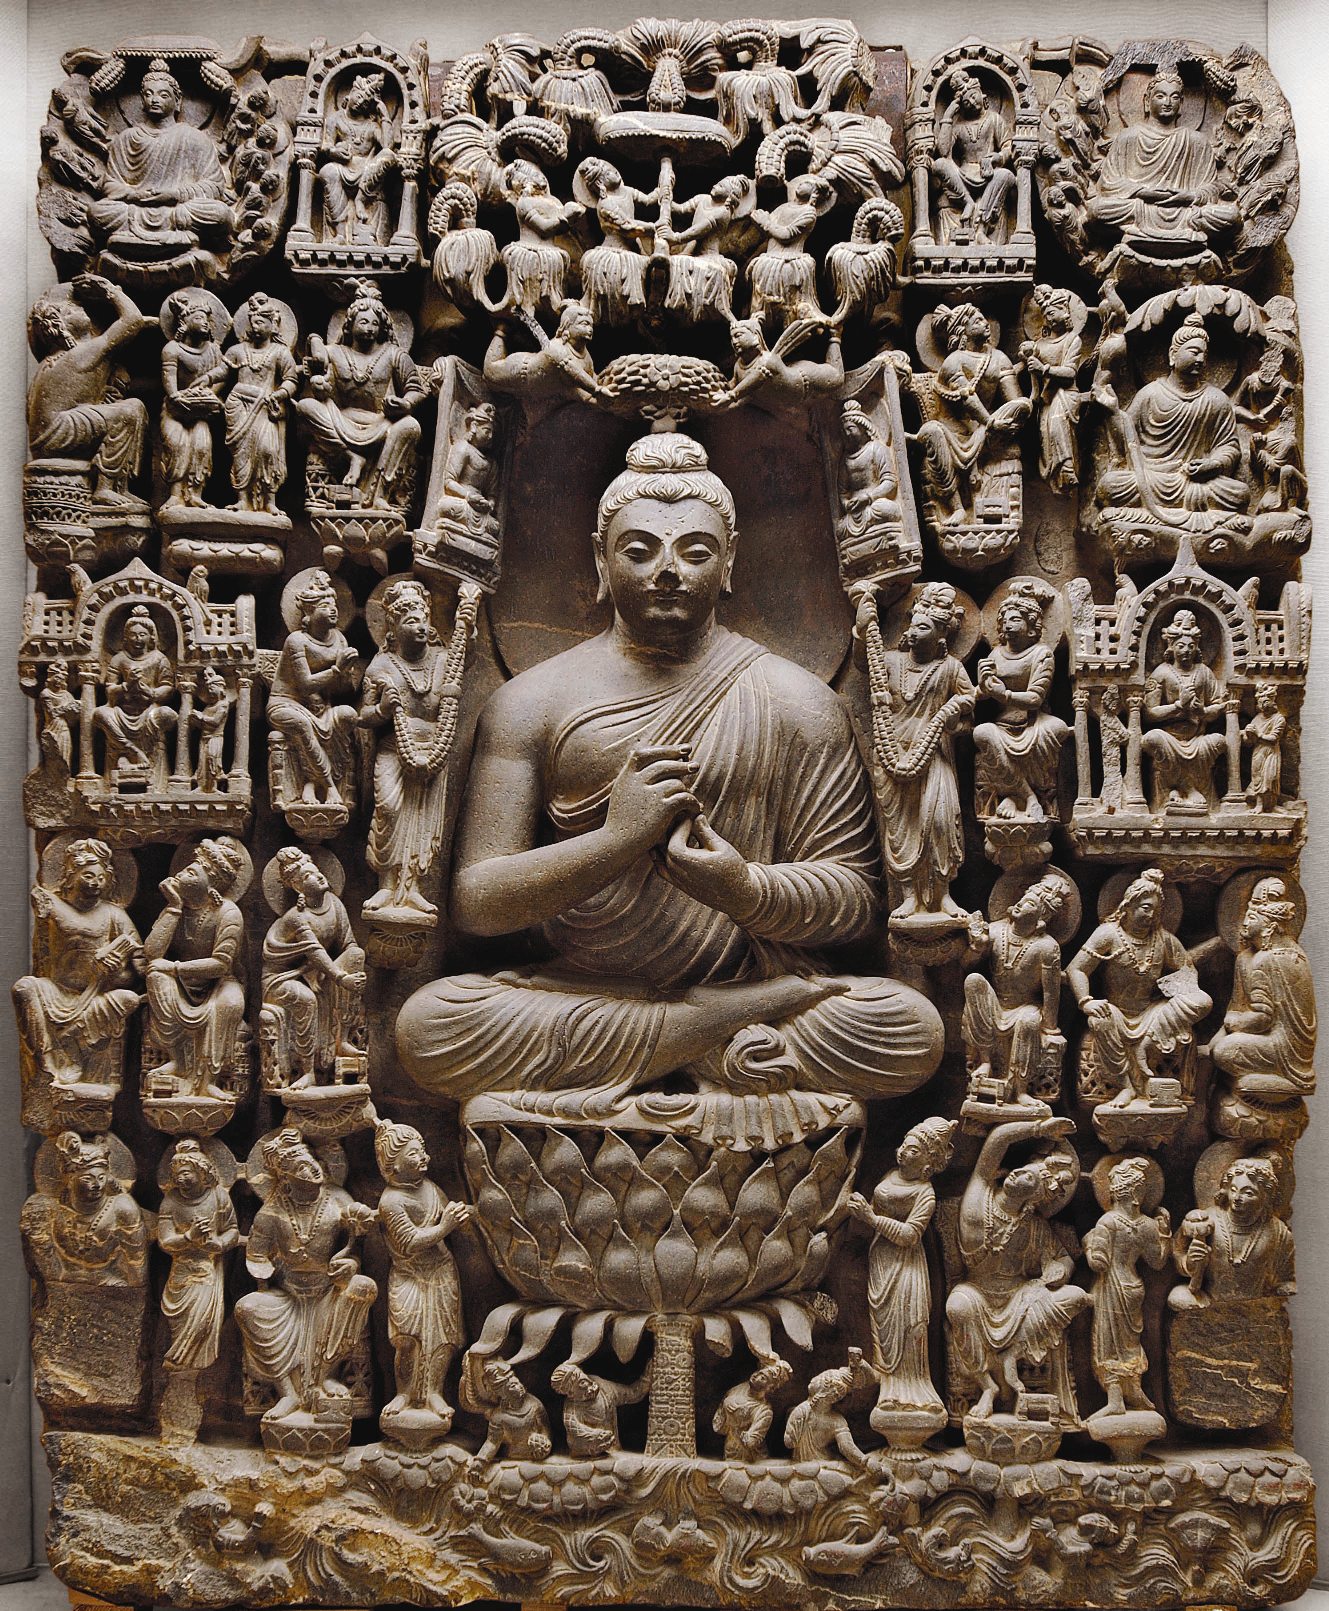 The Buddhist Heritage of Pakistan: Art of Gandhara